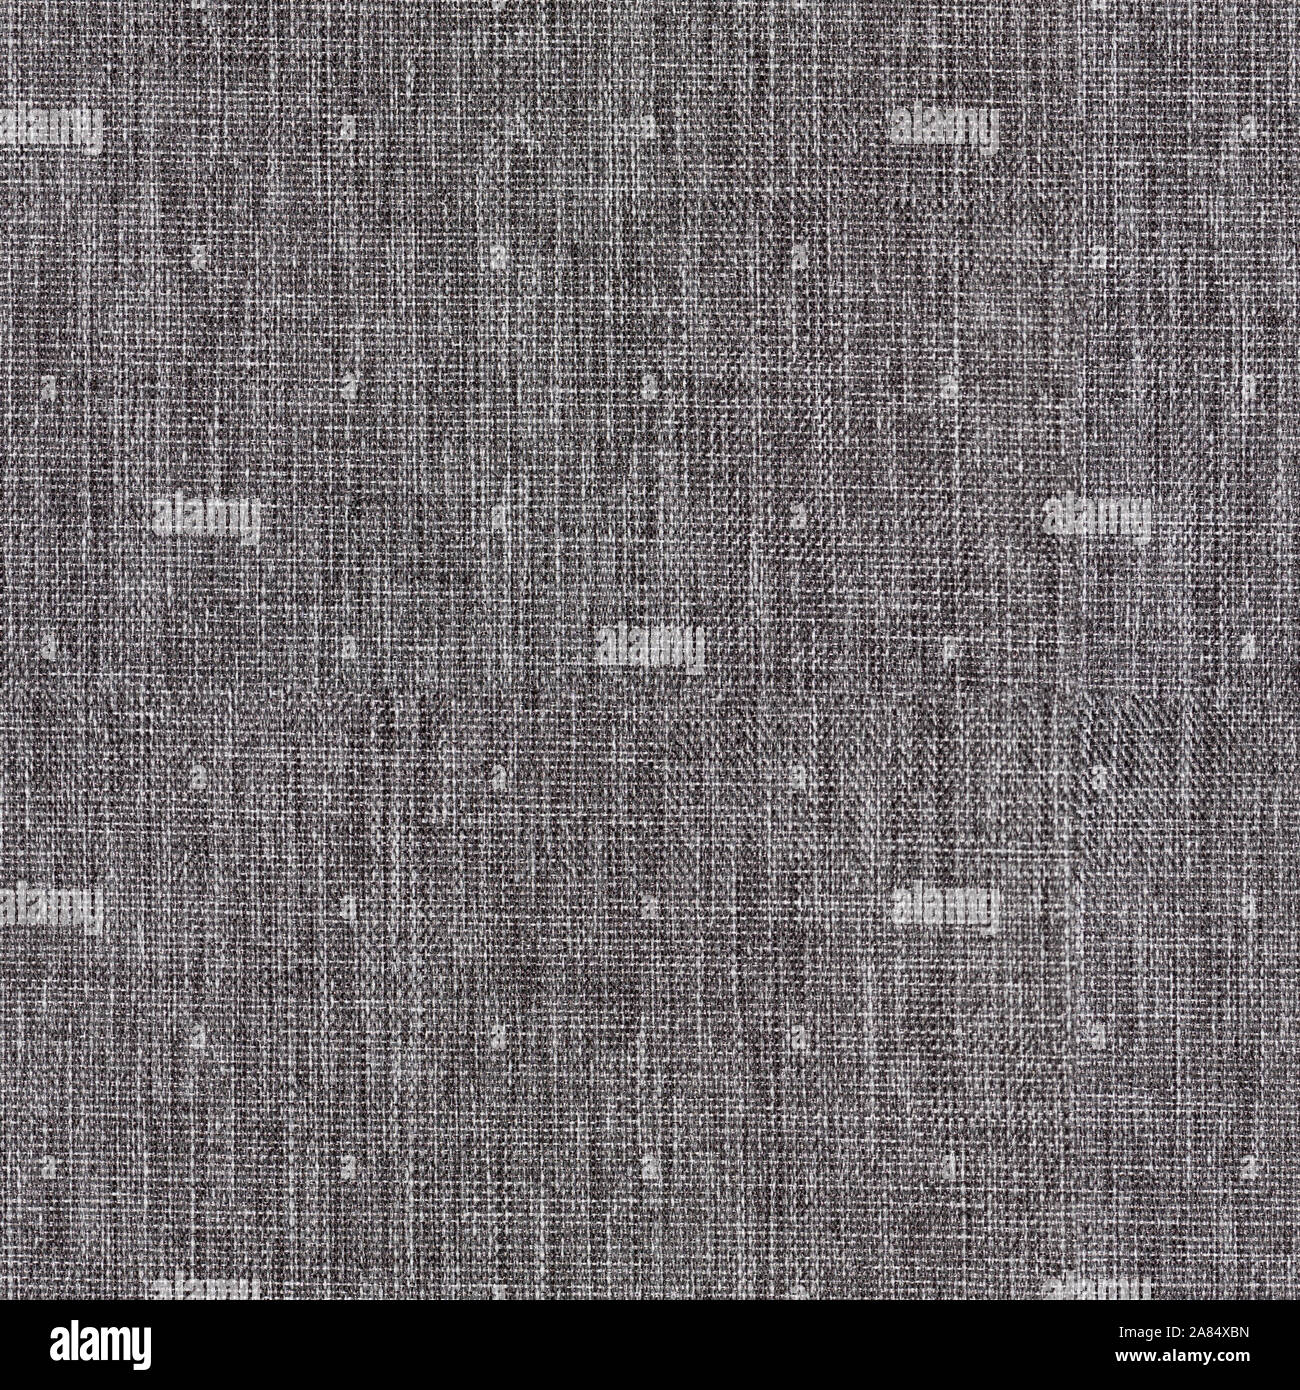 Fabric grey seamless textile texture Stock Photo - Alamy